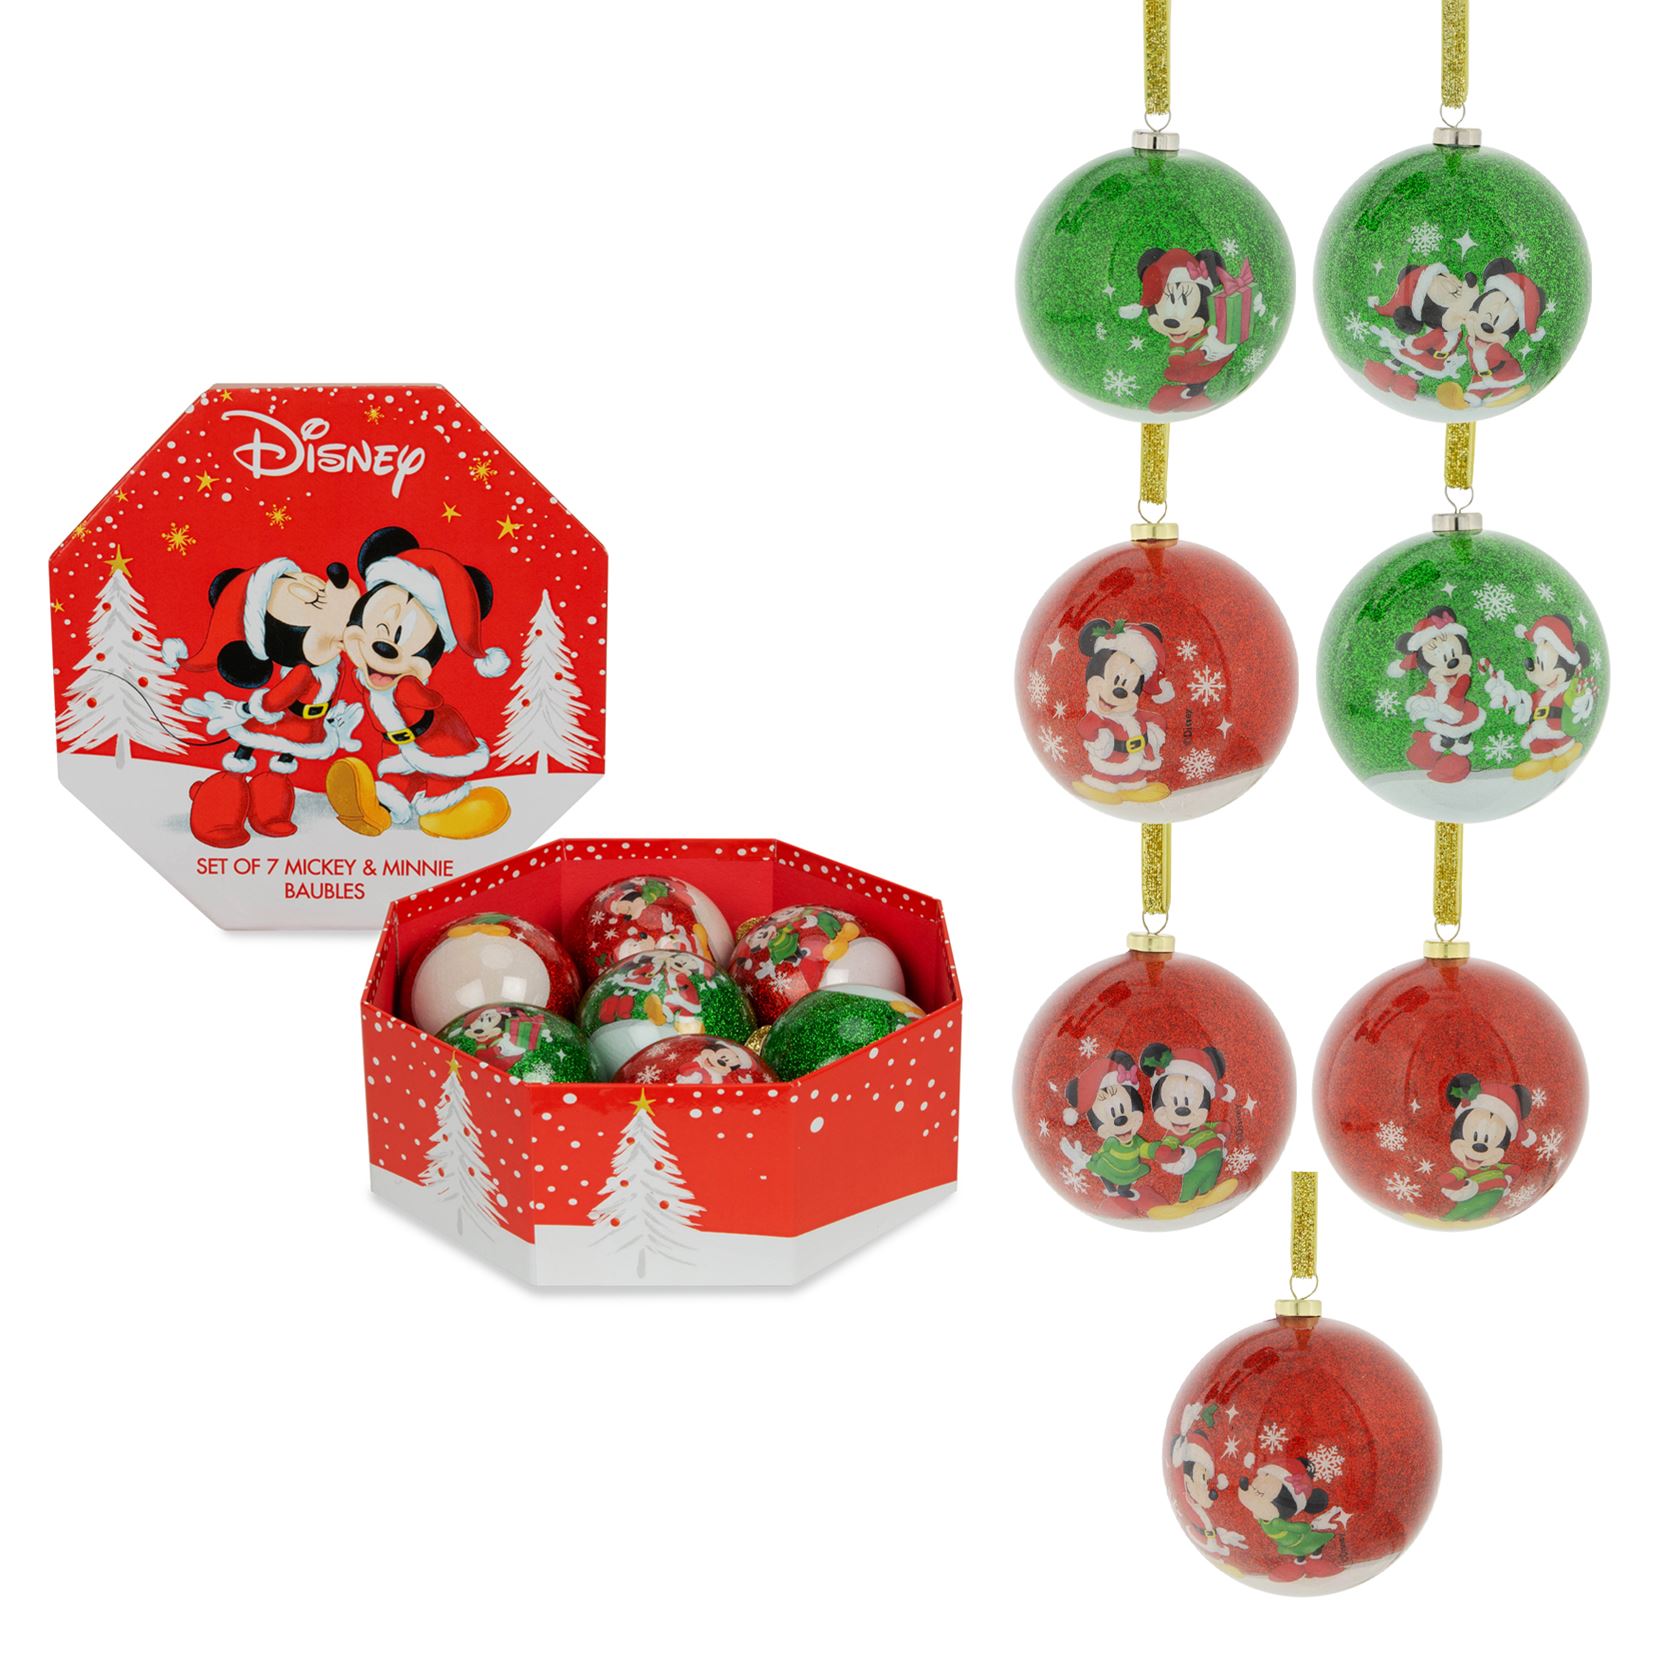 Disney-Kerstballen-set-7stuks-Mickey-Minnie